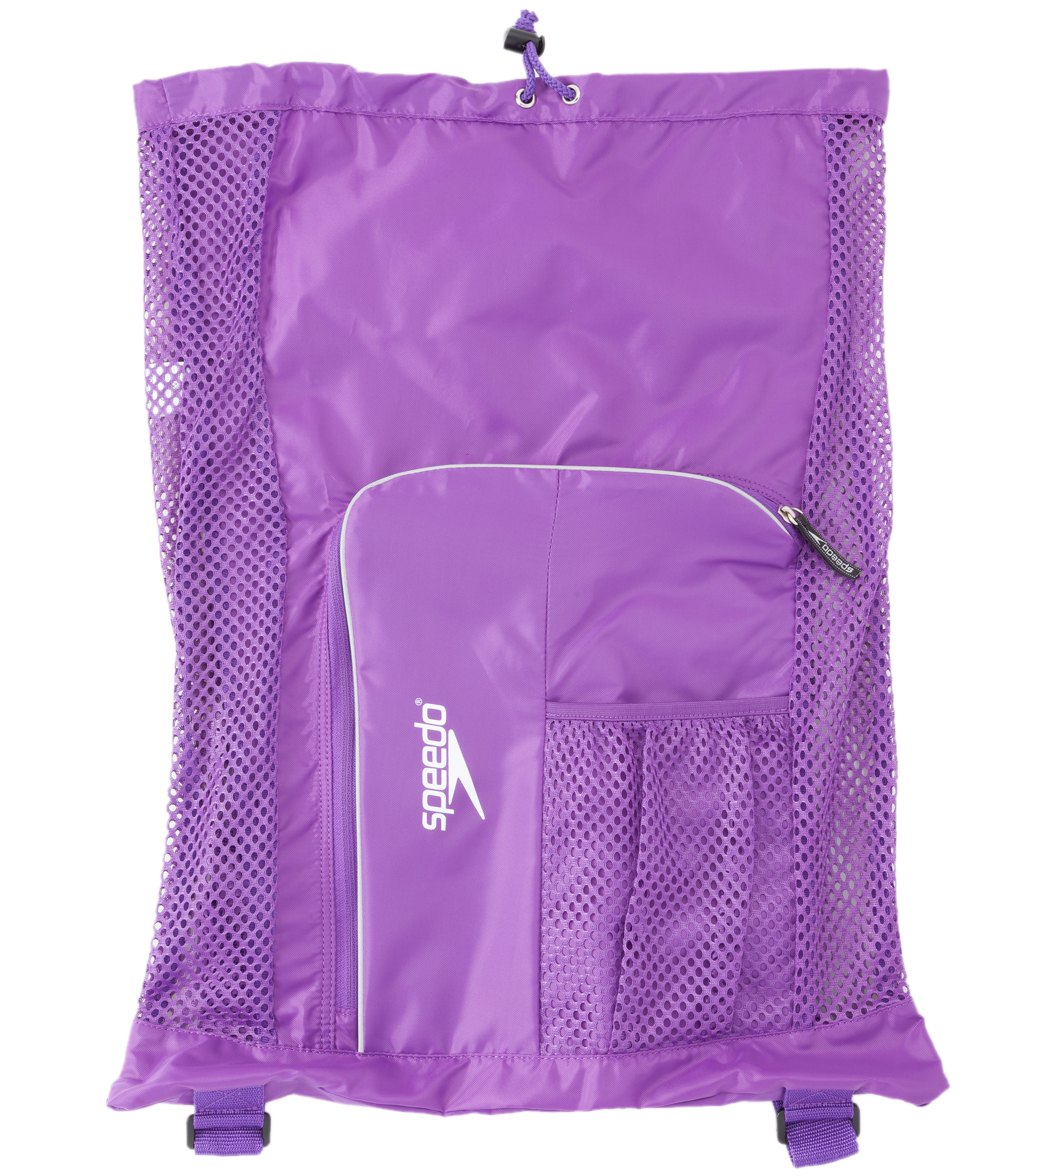 Speedo Deluxe Ventilator Mesh Bag - Prisma Violet - Swimoutlet.com